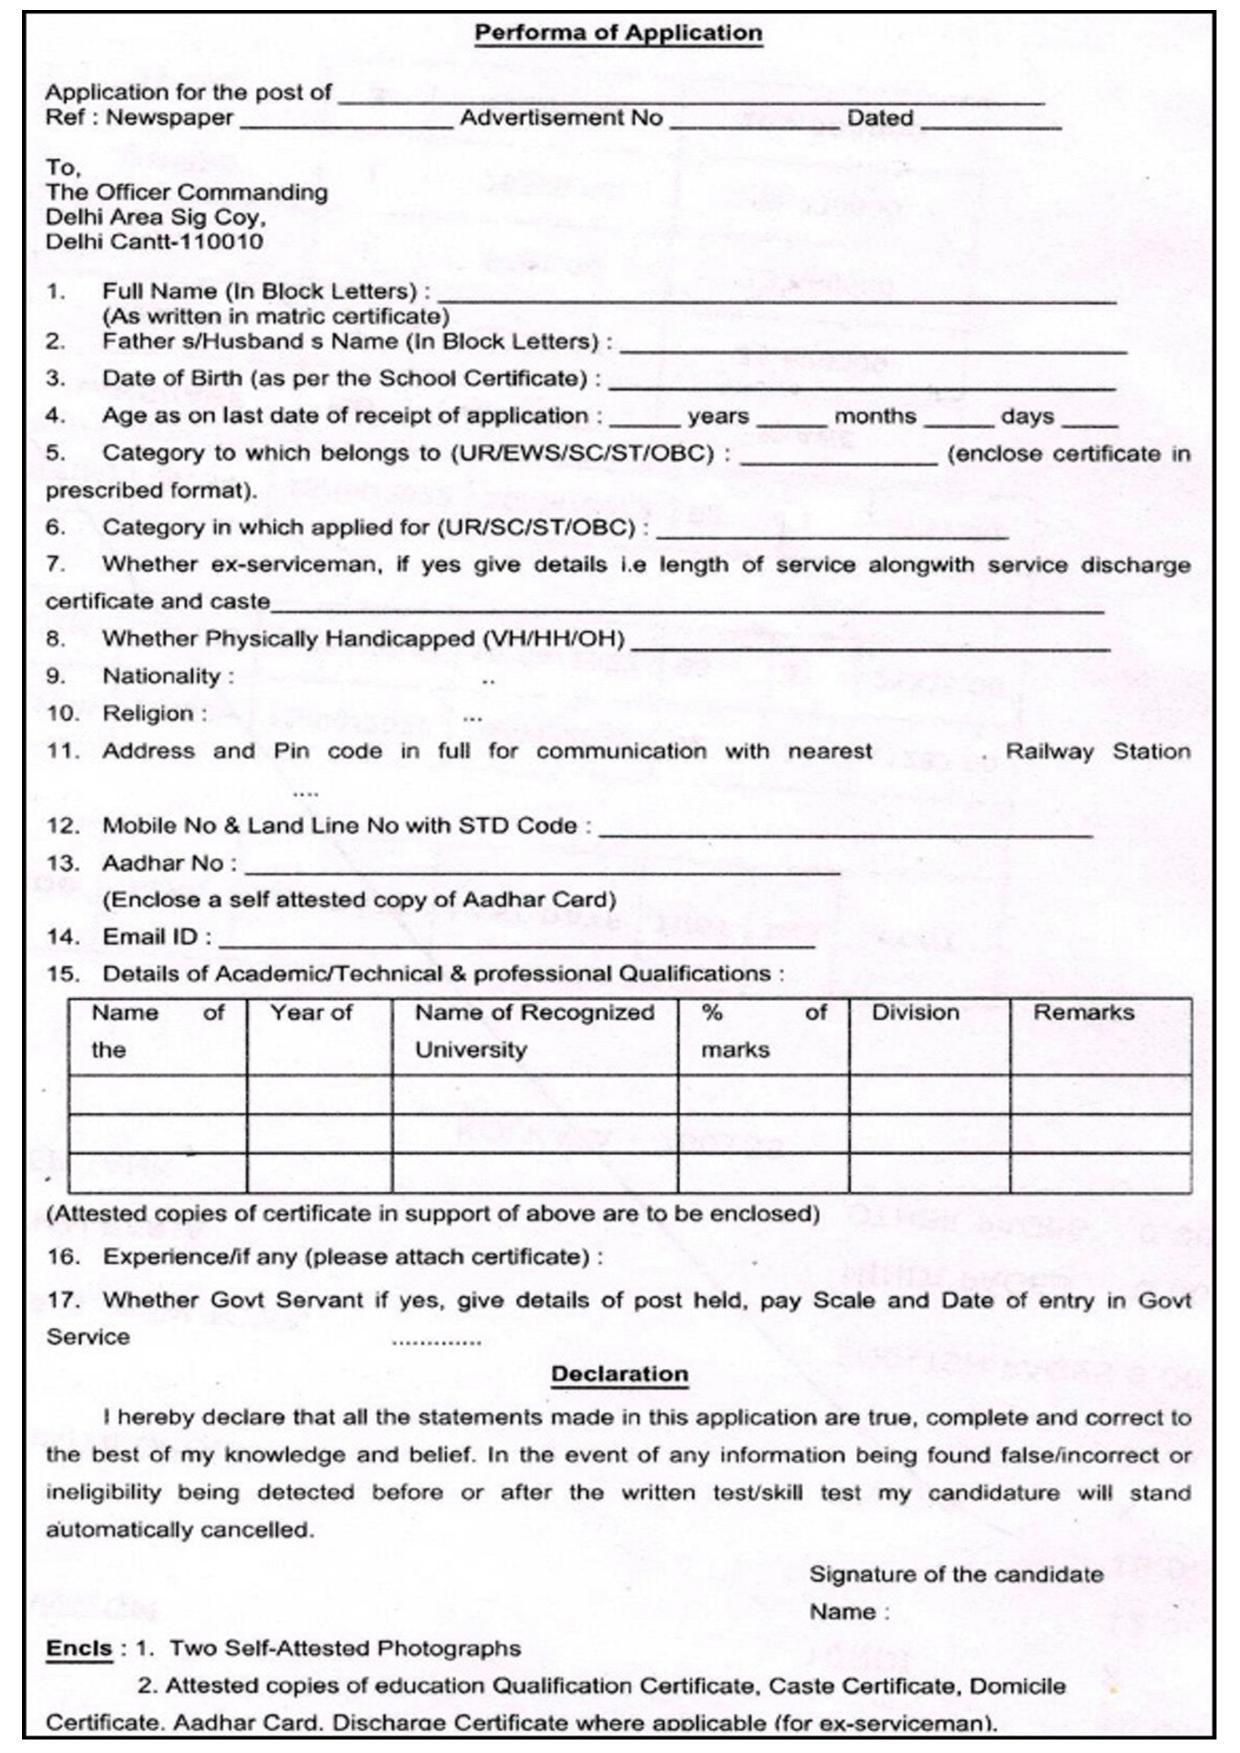 Delhi Area Signal Company Recruitment 2022 Application Form - Page 1